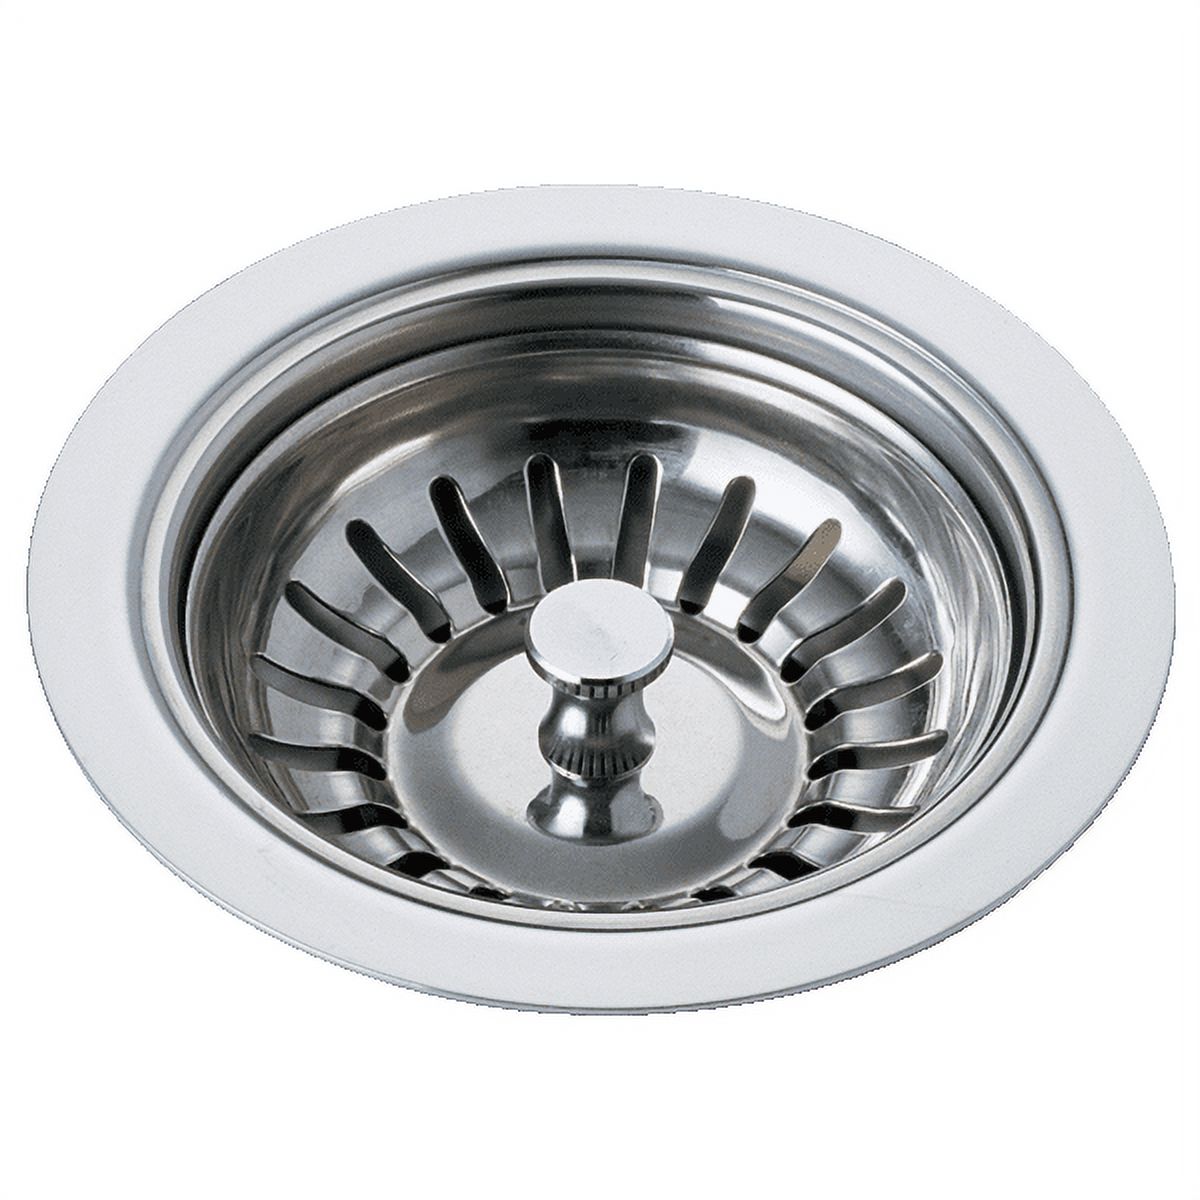 Delta 72010 Basket Strainer Flange For Standard Kitchen Sink Drain Openings - Chrome - image 1 of 7